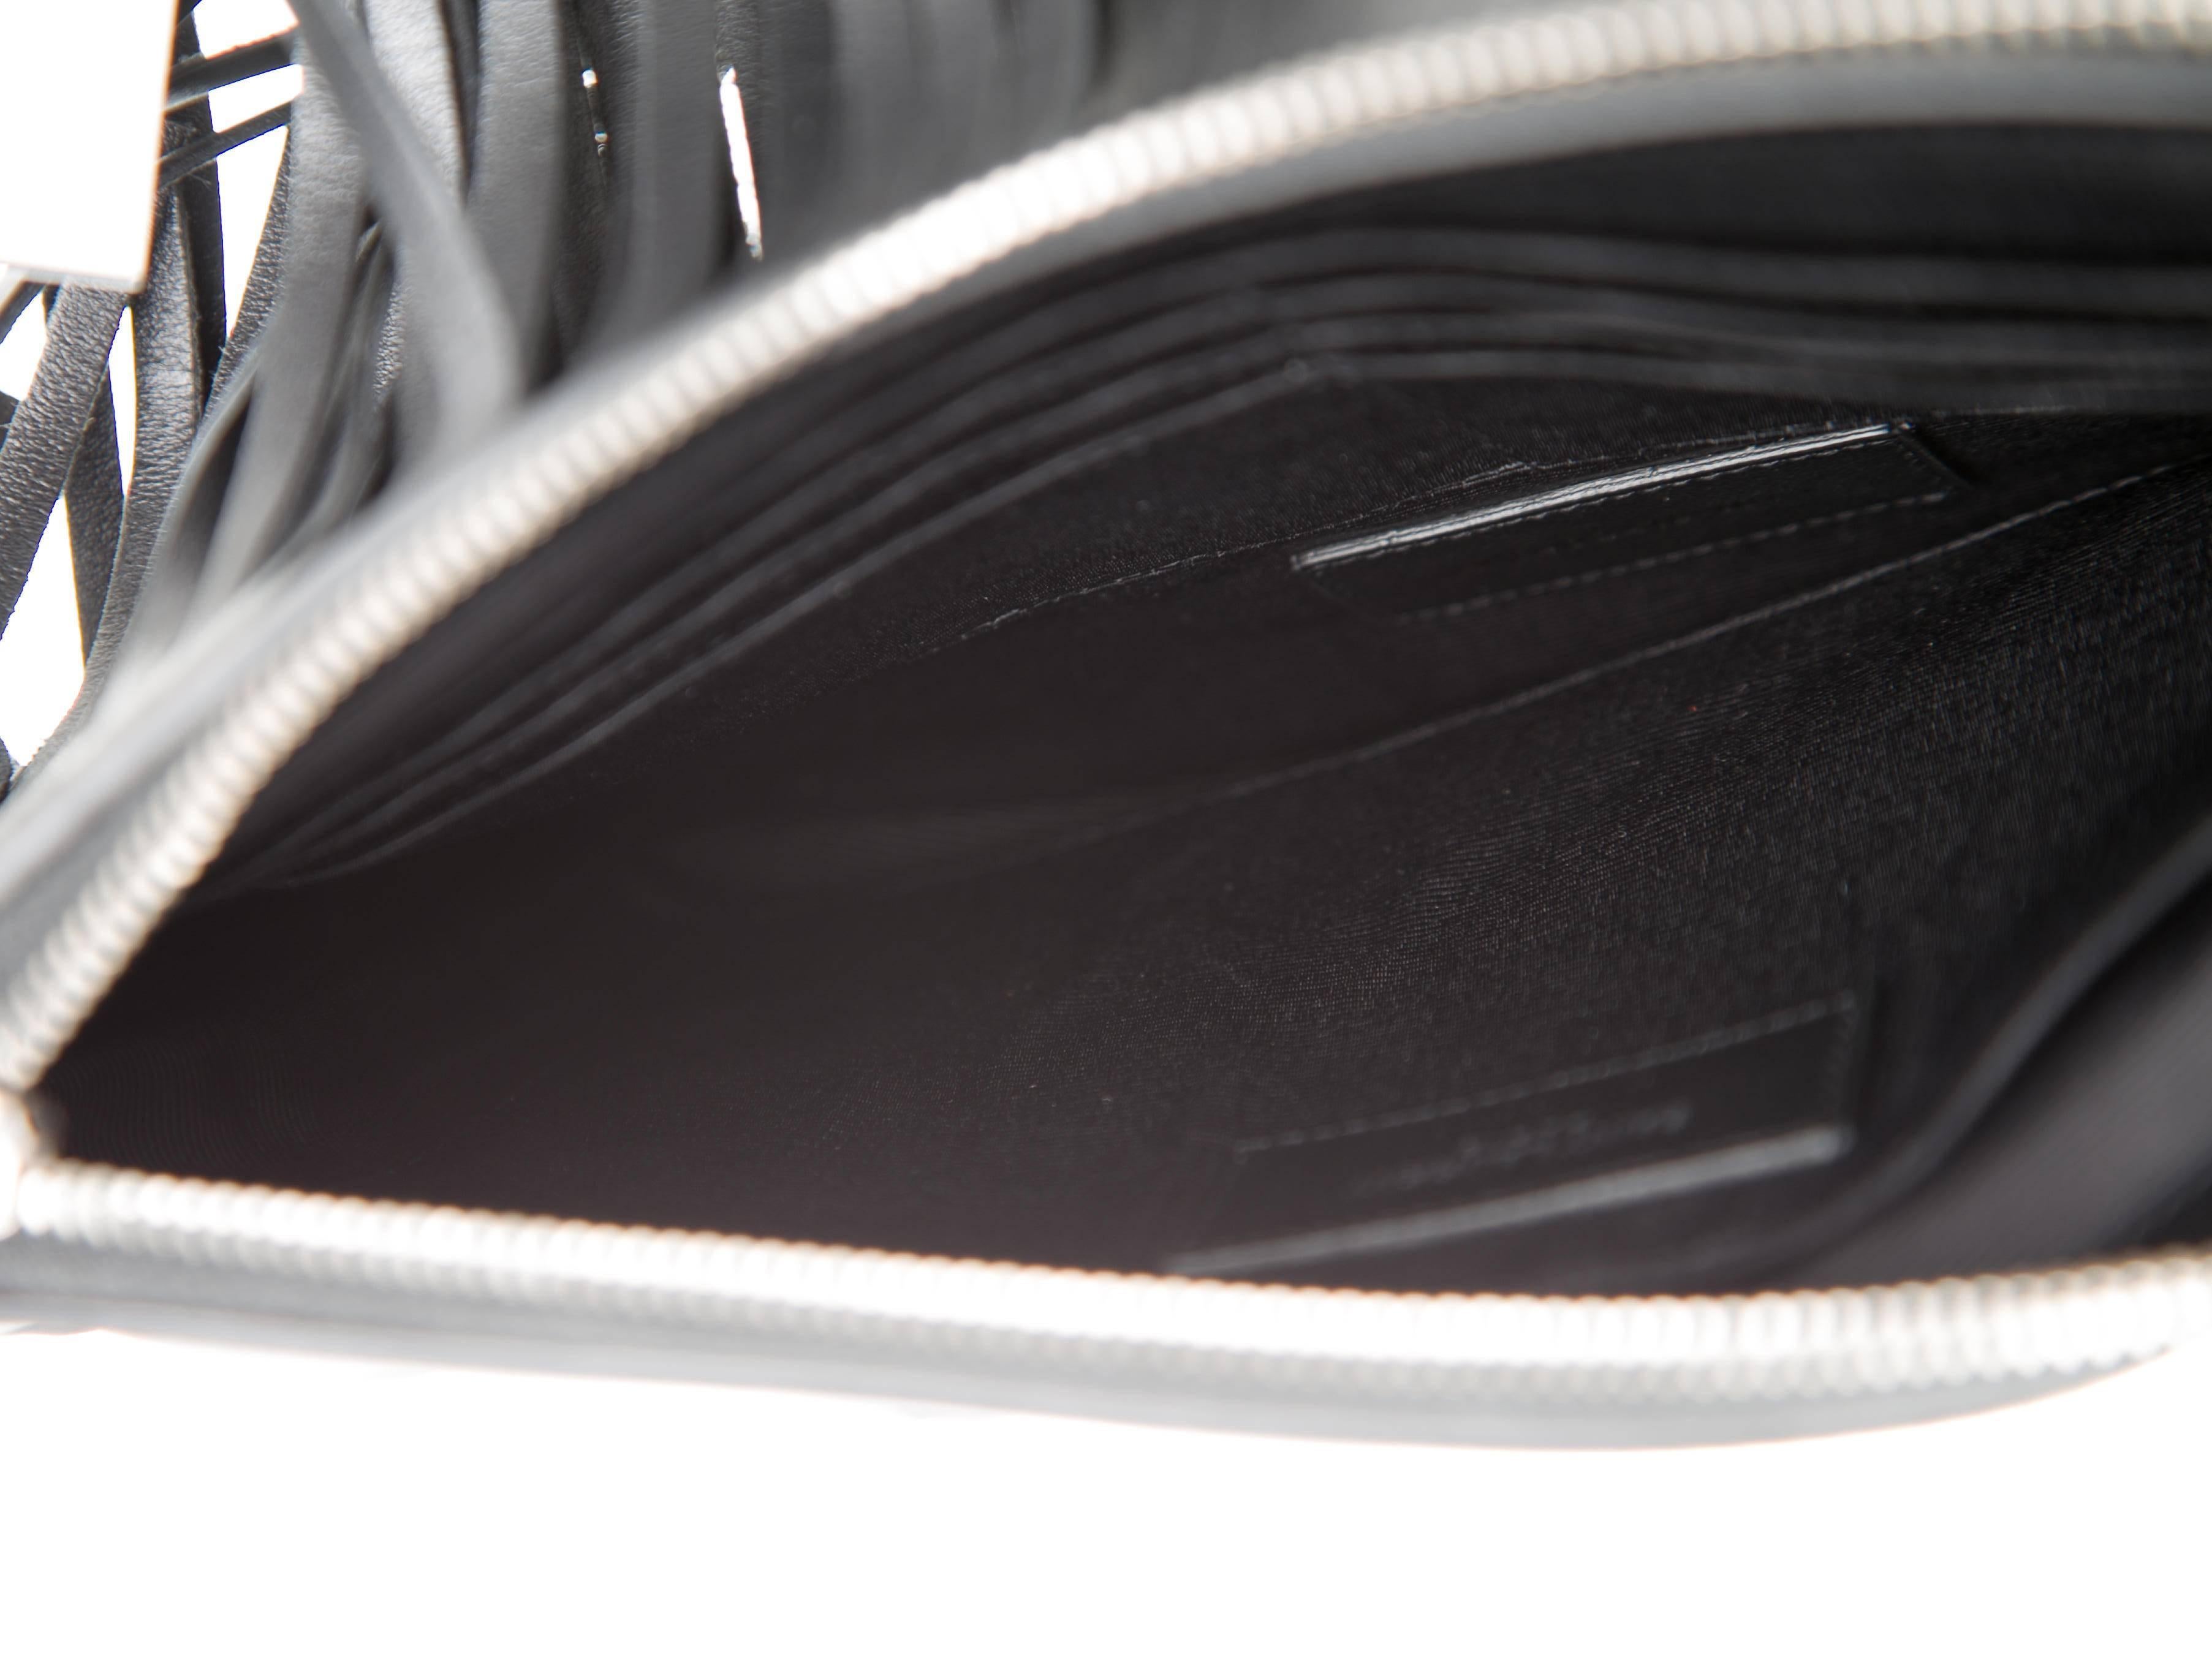 Saint Laurent NEW & SOLD OUT Black Leather Evening Clutch Bag 1